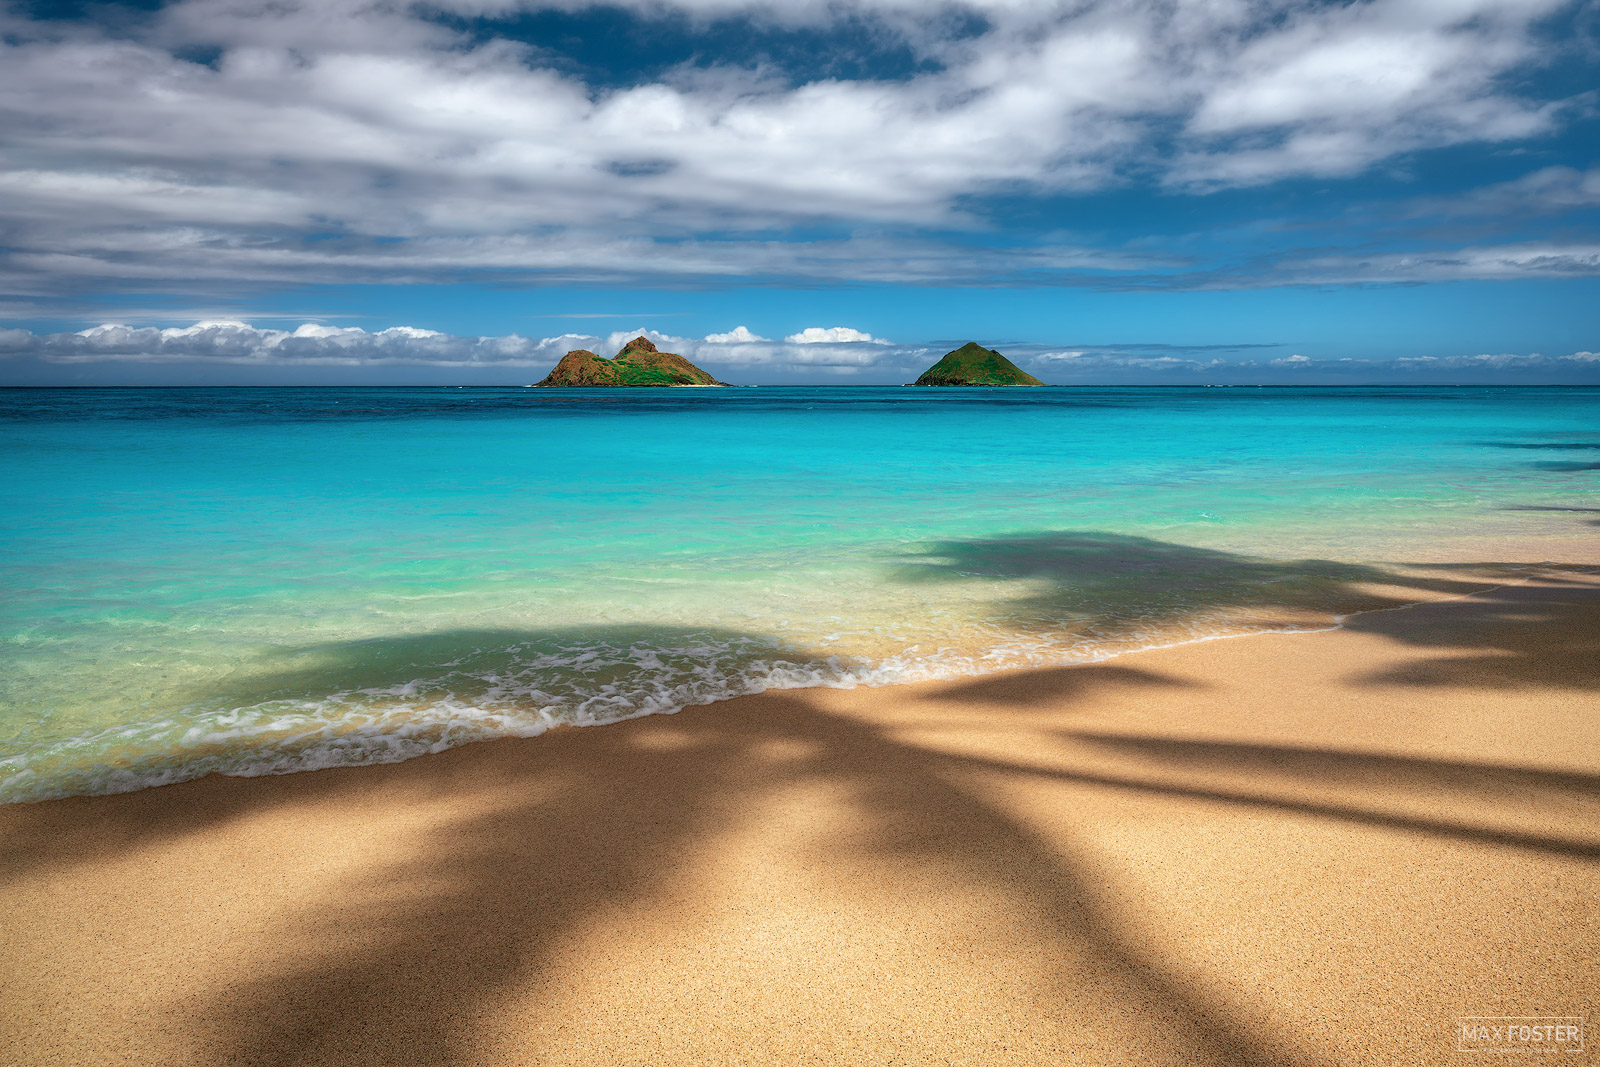 Palm Trees & Daydreams, Lanikai Beach, Hawaii. Photo © copyright by Max Foster.